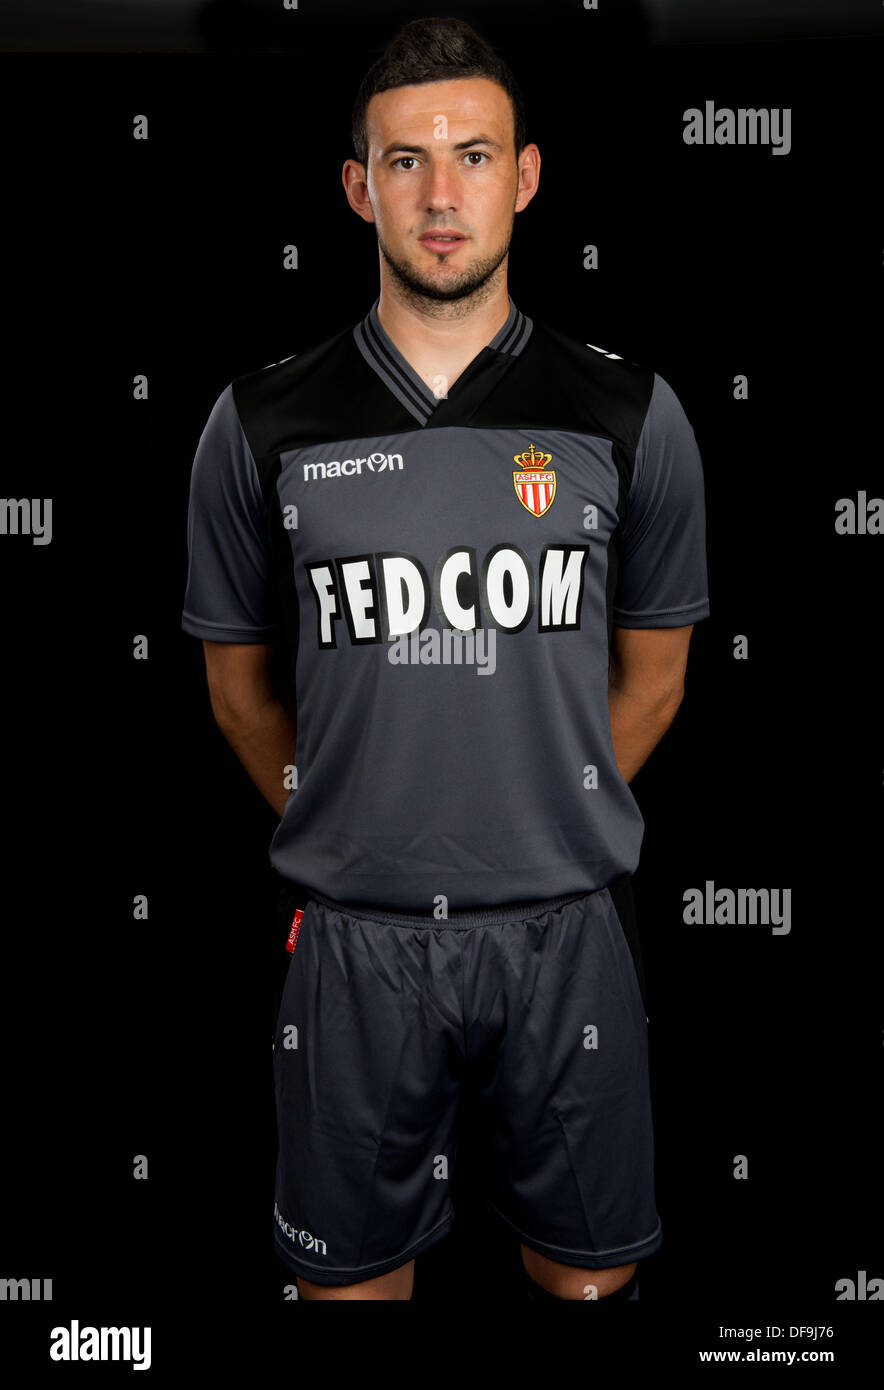 September 2013. French League 1 football team Monaco official photo-shoot for the 2013-14 season. Danijel Subasic Stock Photo